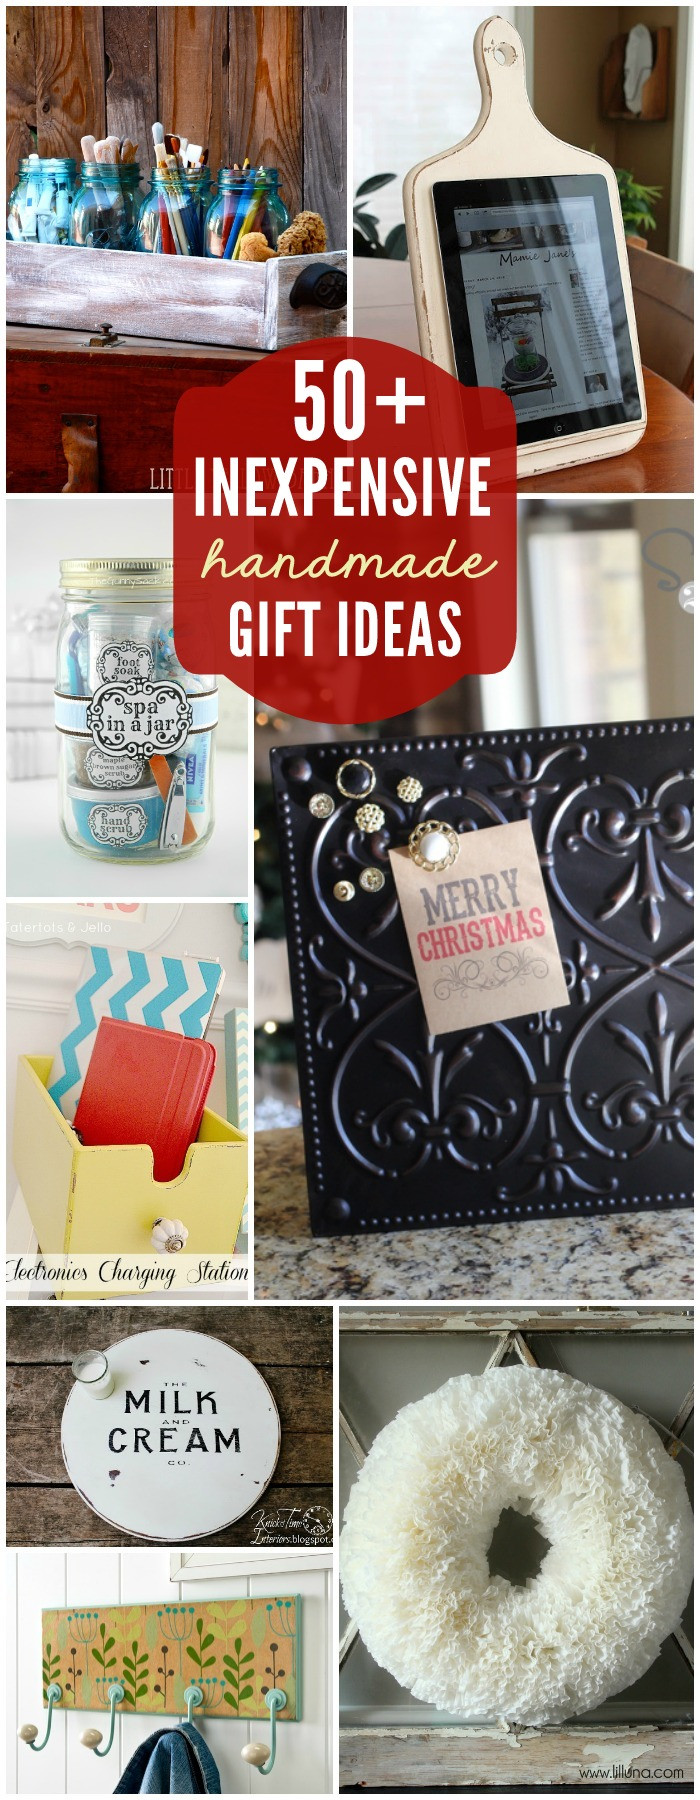 Best ideas about Homemade Birthday Gift Ideas
. Save or Pin Inexpensive Birthday Gift Ideas Now.